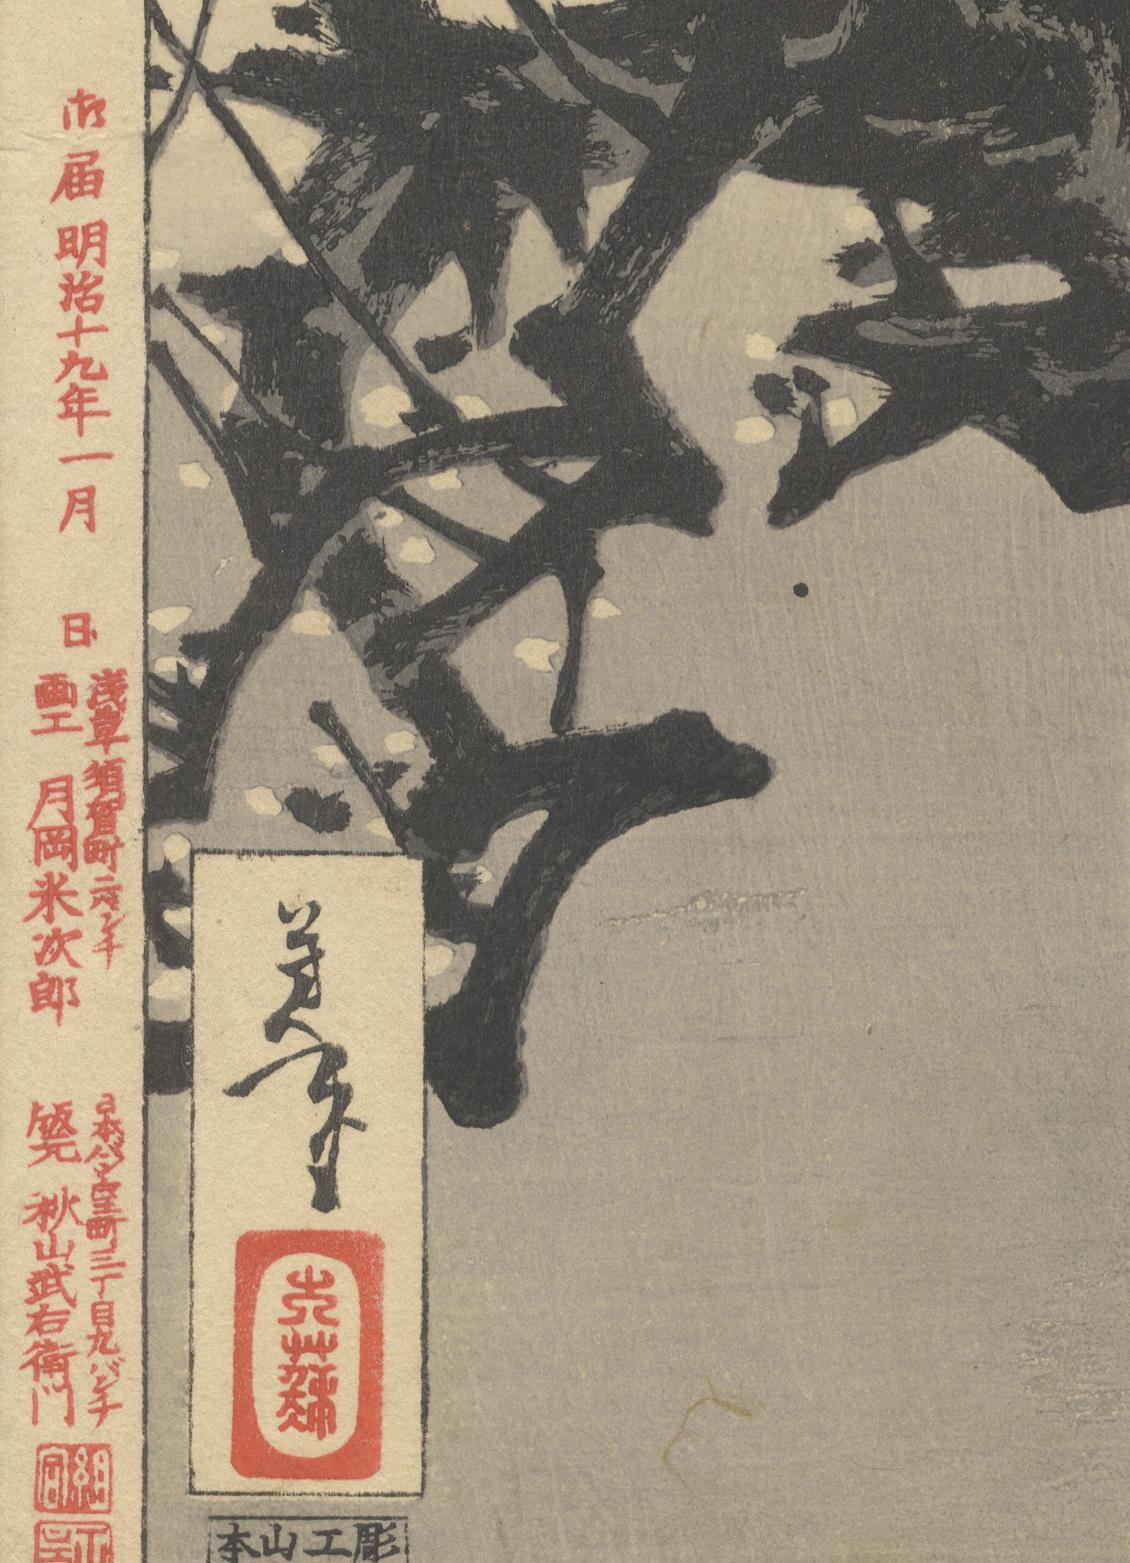 Hand-Crafted Yoshitoshi Tsukioka, Moon, Poem, Night View, Original Japanese Woodblock Print